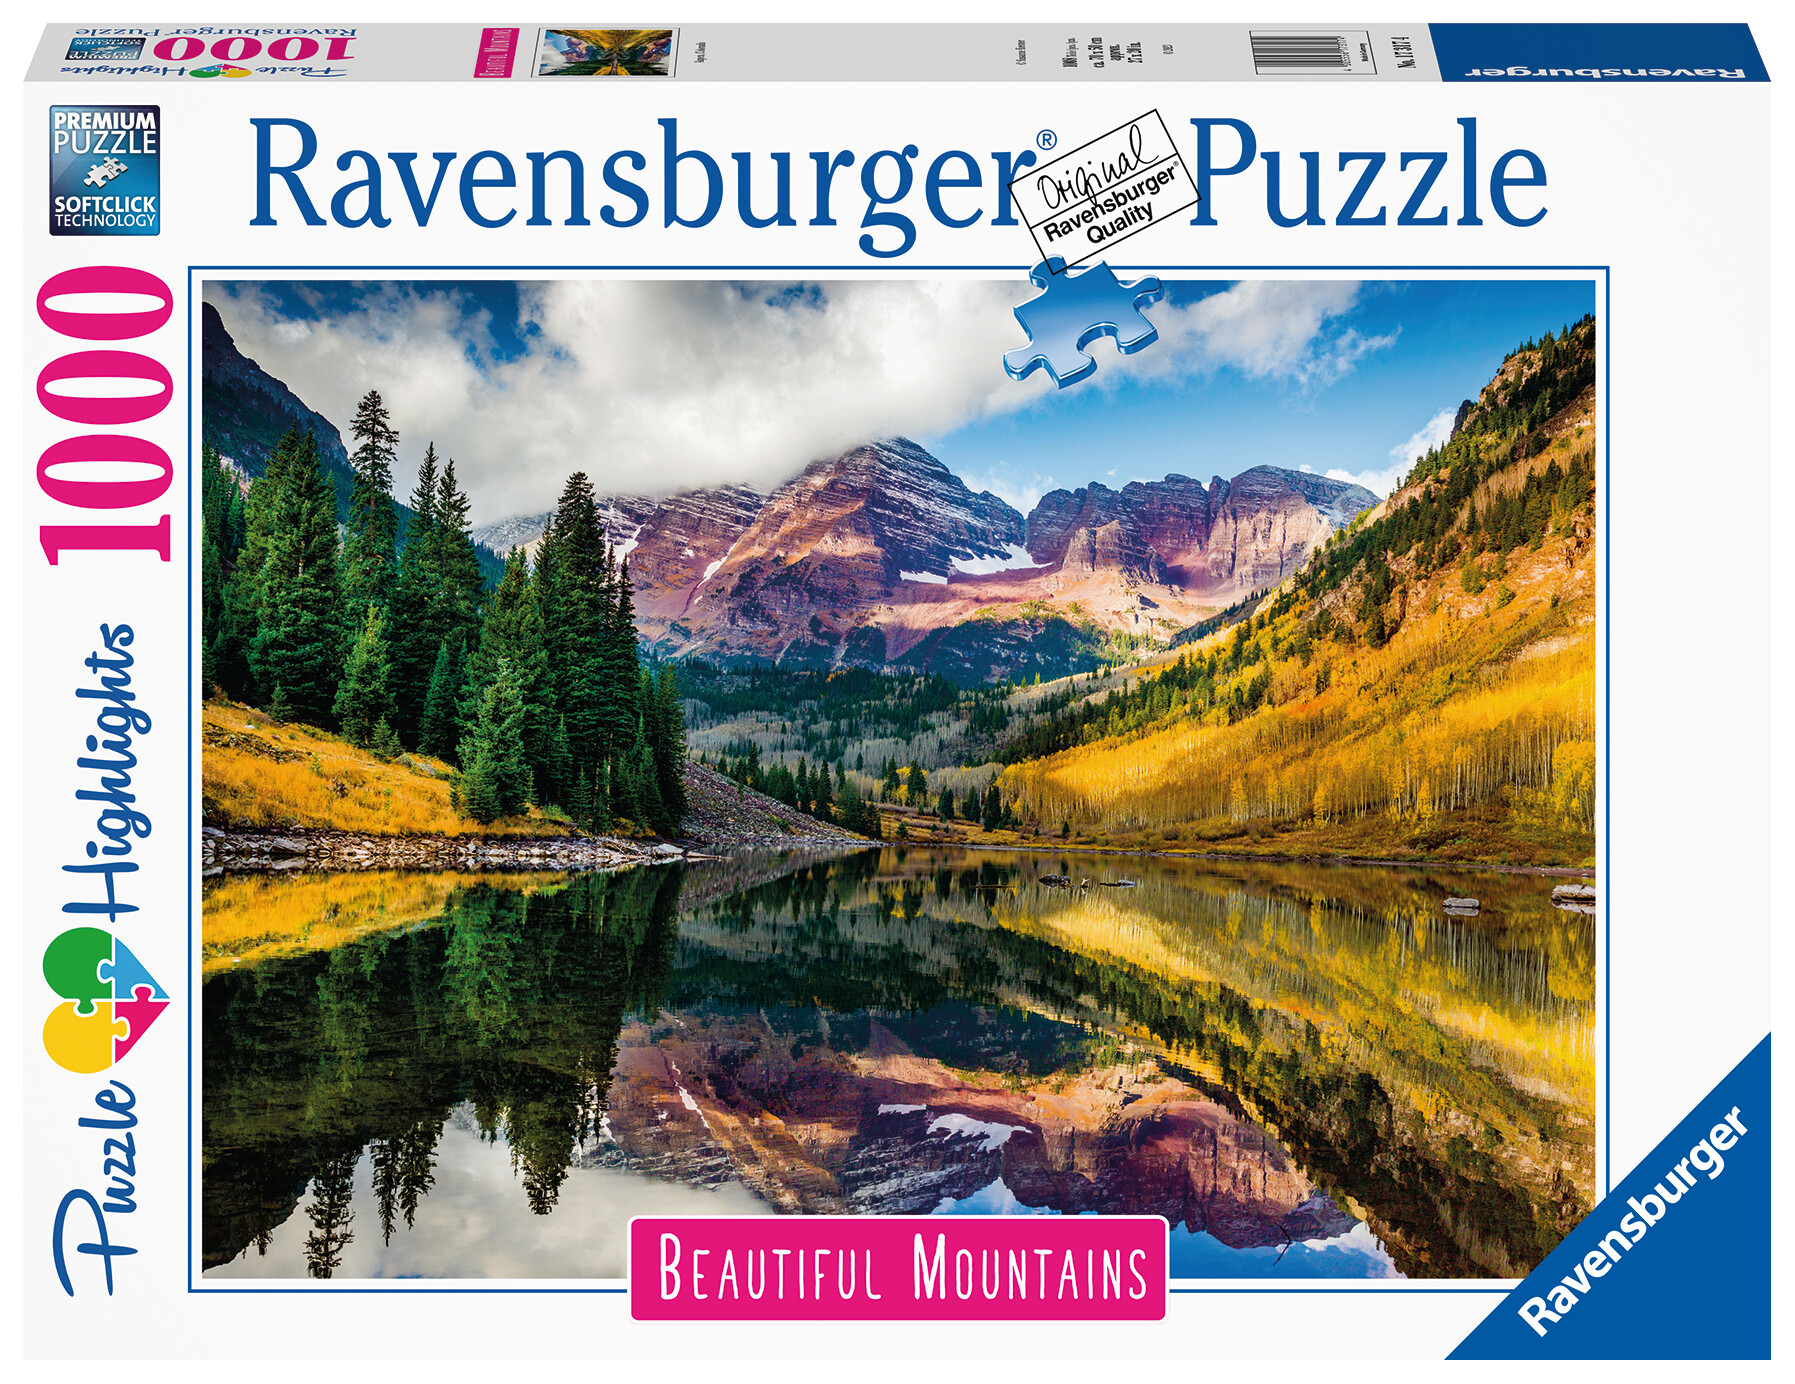 Ravensburger - puzzle aspen, colorado, collezione beautiful mountains, 1000 pezzi, puzzle adulti - RAVENSBURGER